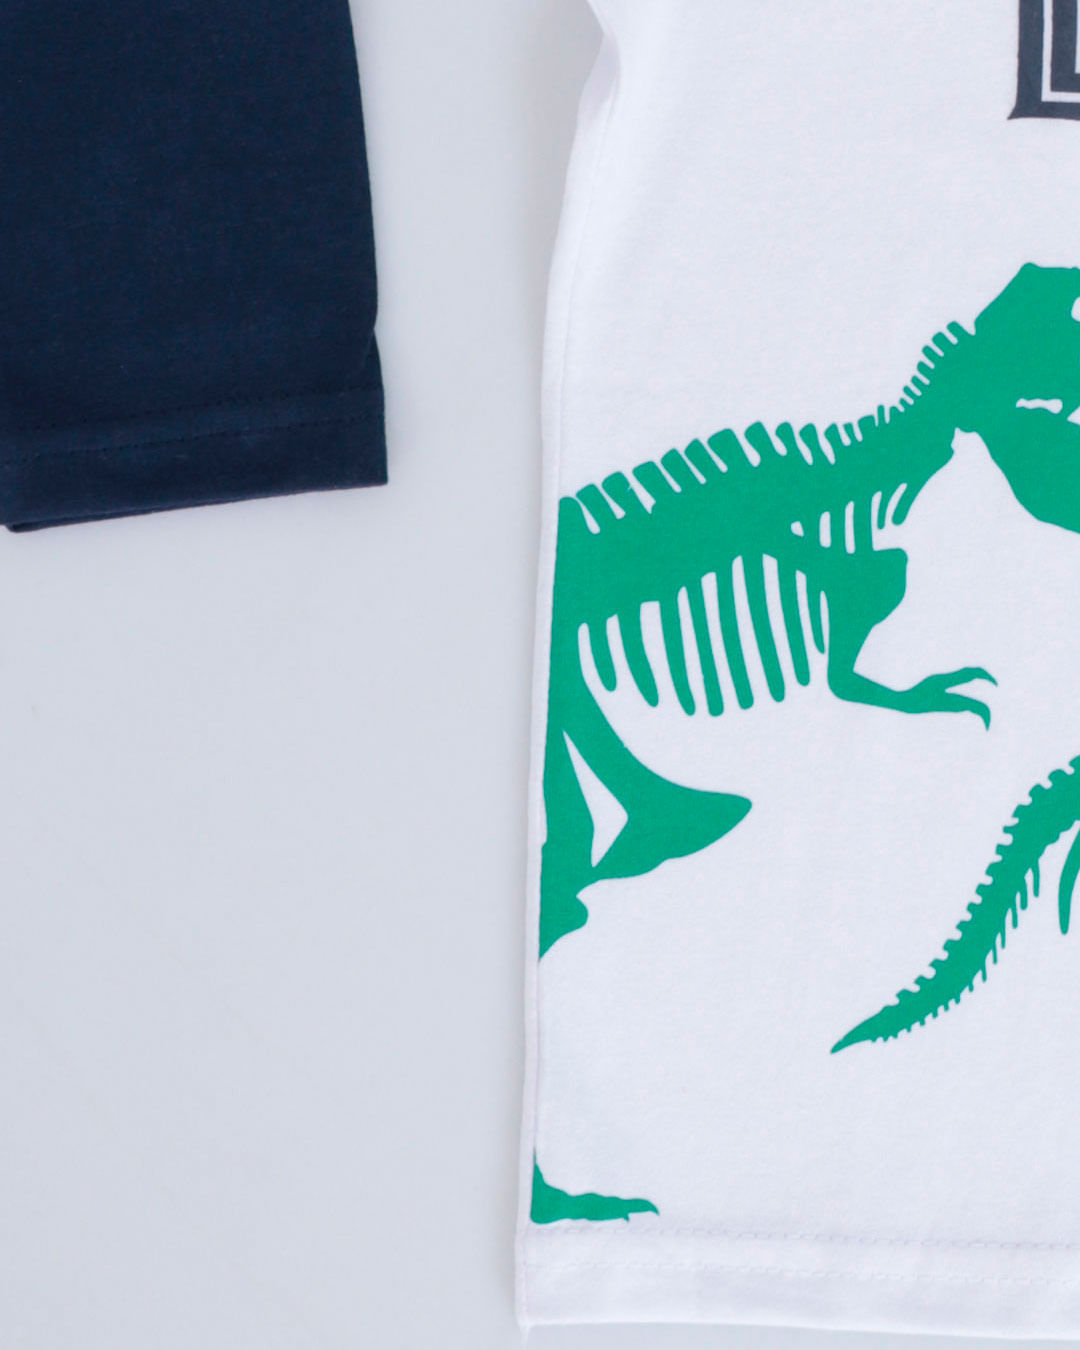 Camiseta-Bebe-Recorte-Manga-Longa-Explorer-Dino-Branca